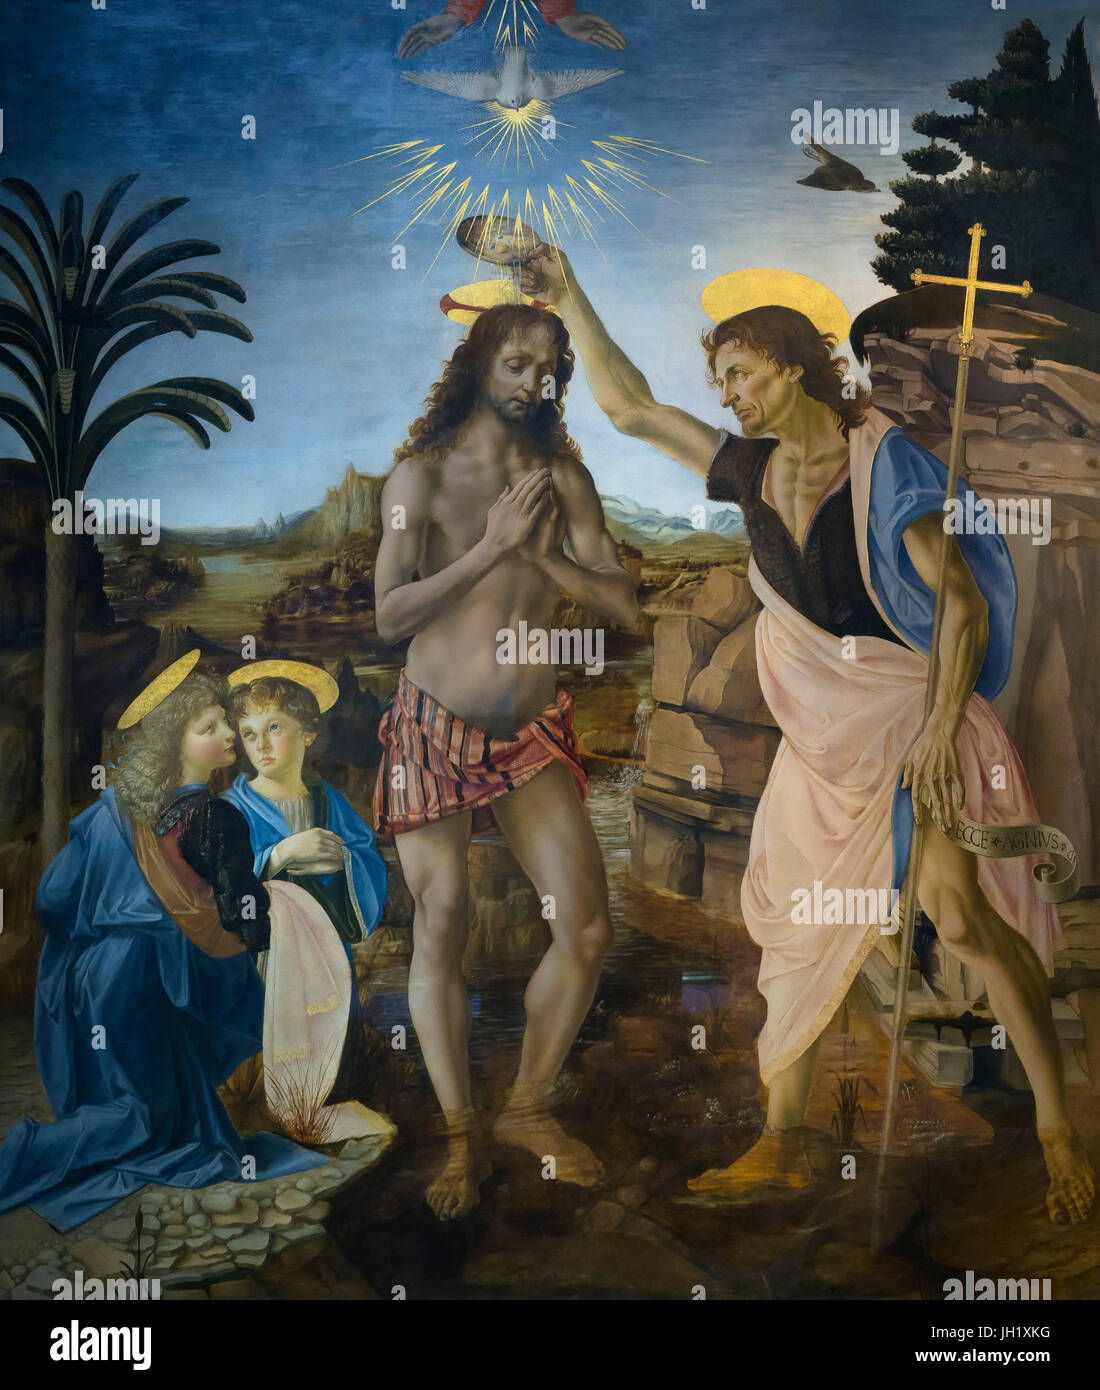 Bautismo de Cristo, Andrea del Verrocchio y Leonardo da Vinci, 1470-1475, Galería Uffizi, Florencia, Toscana, Italia, Europa Foto de stock